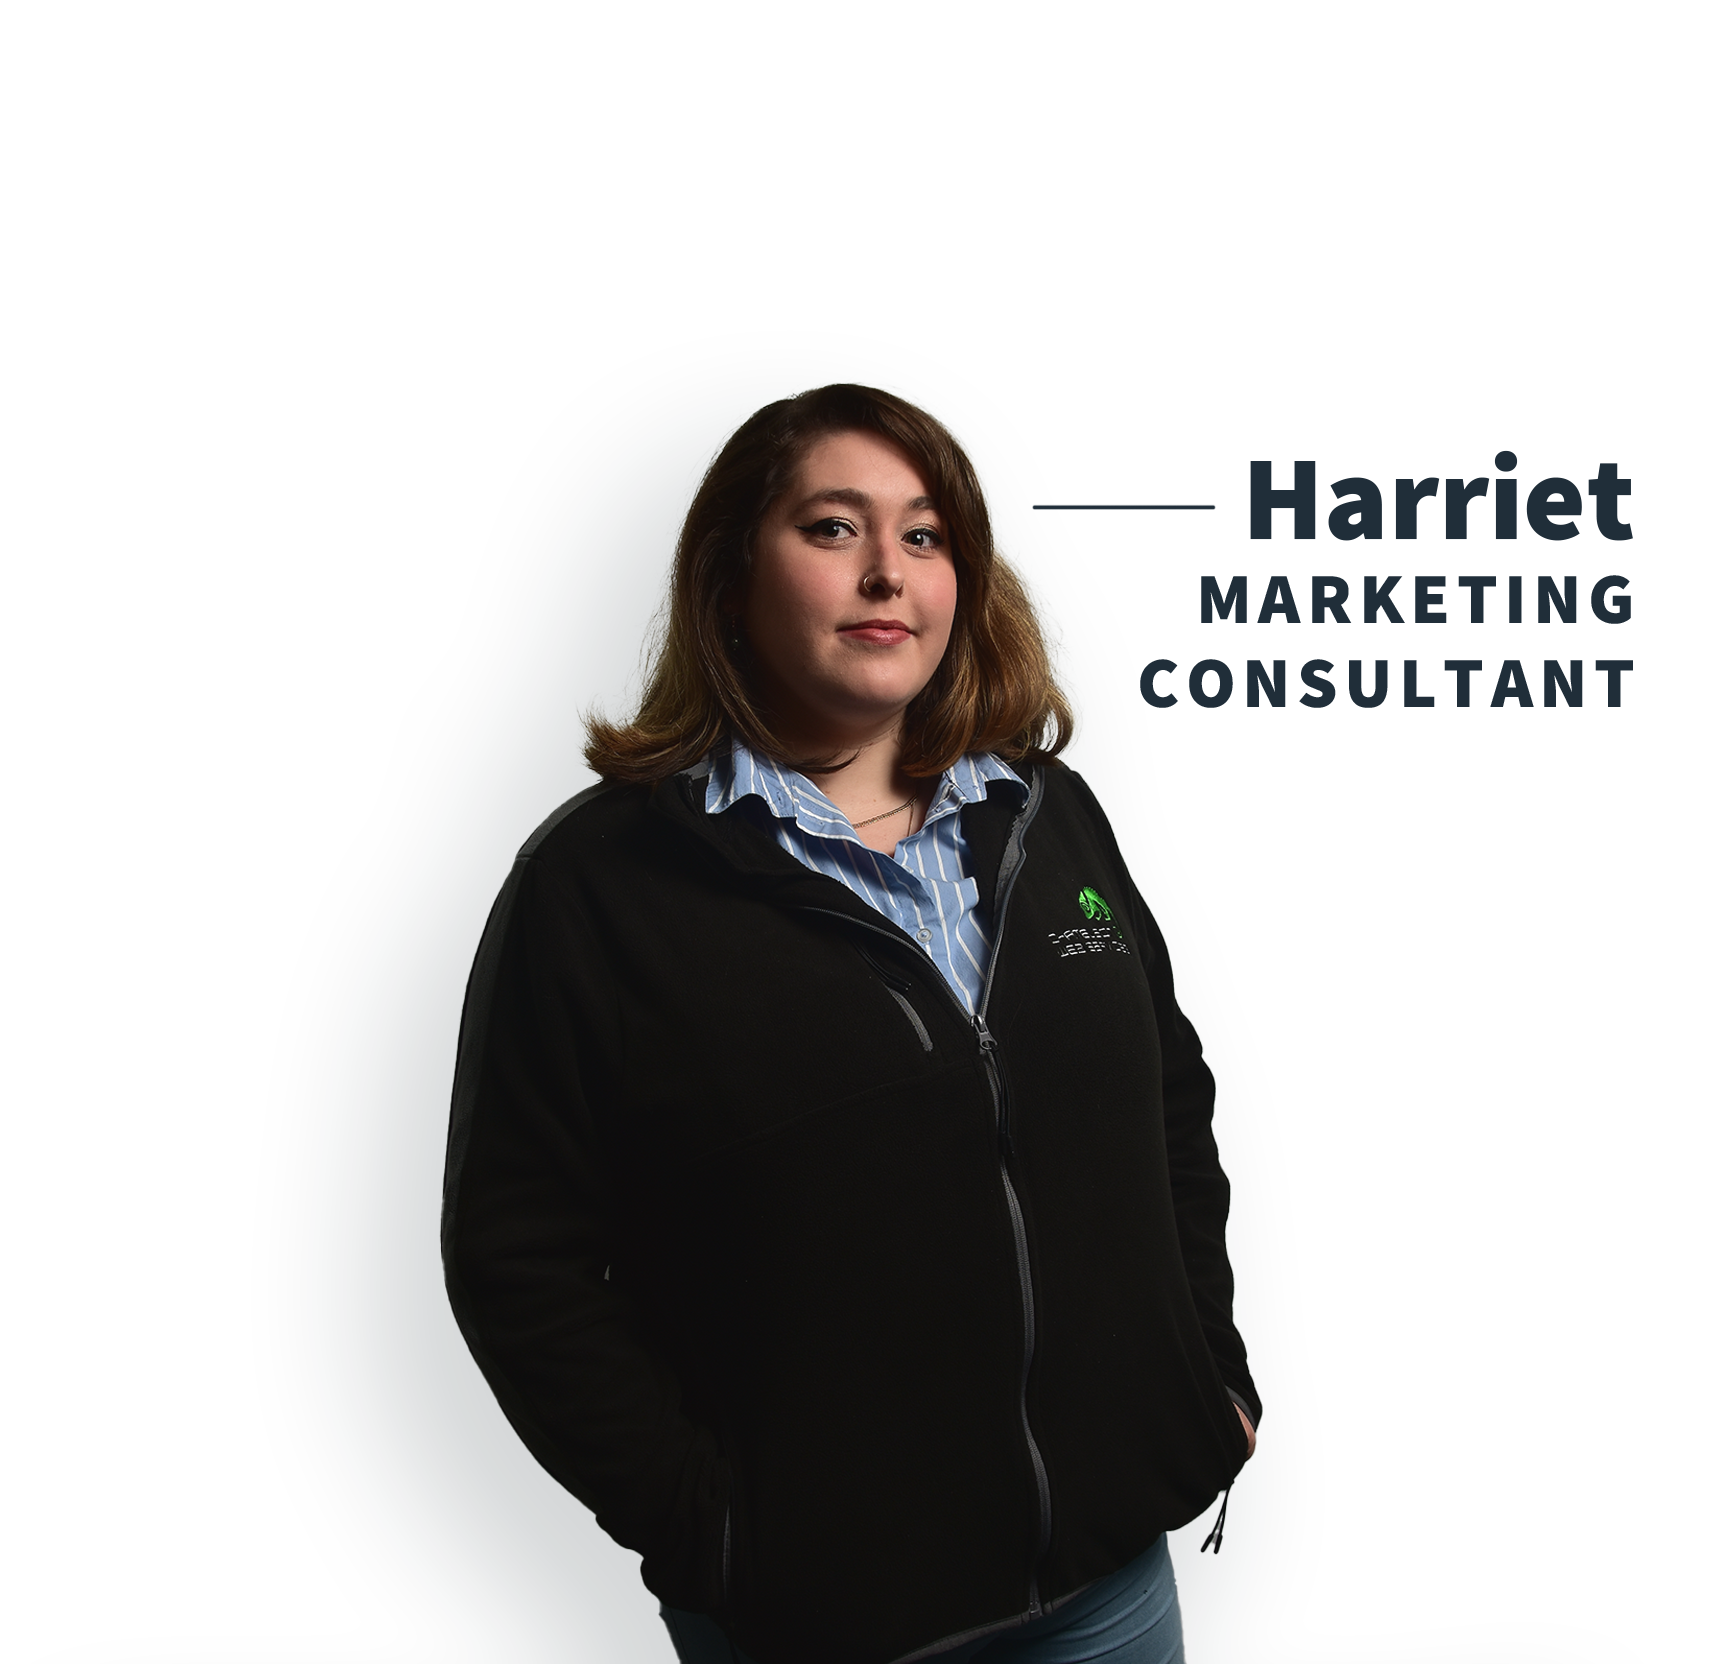 Harriet Digital Marketing